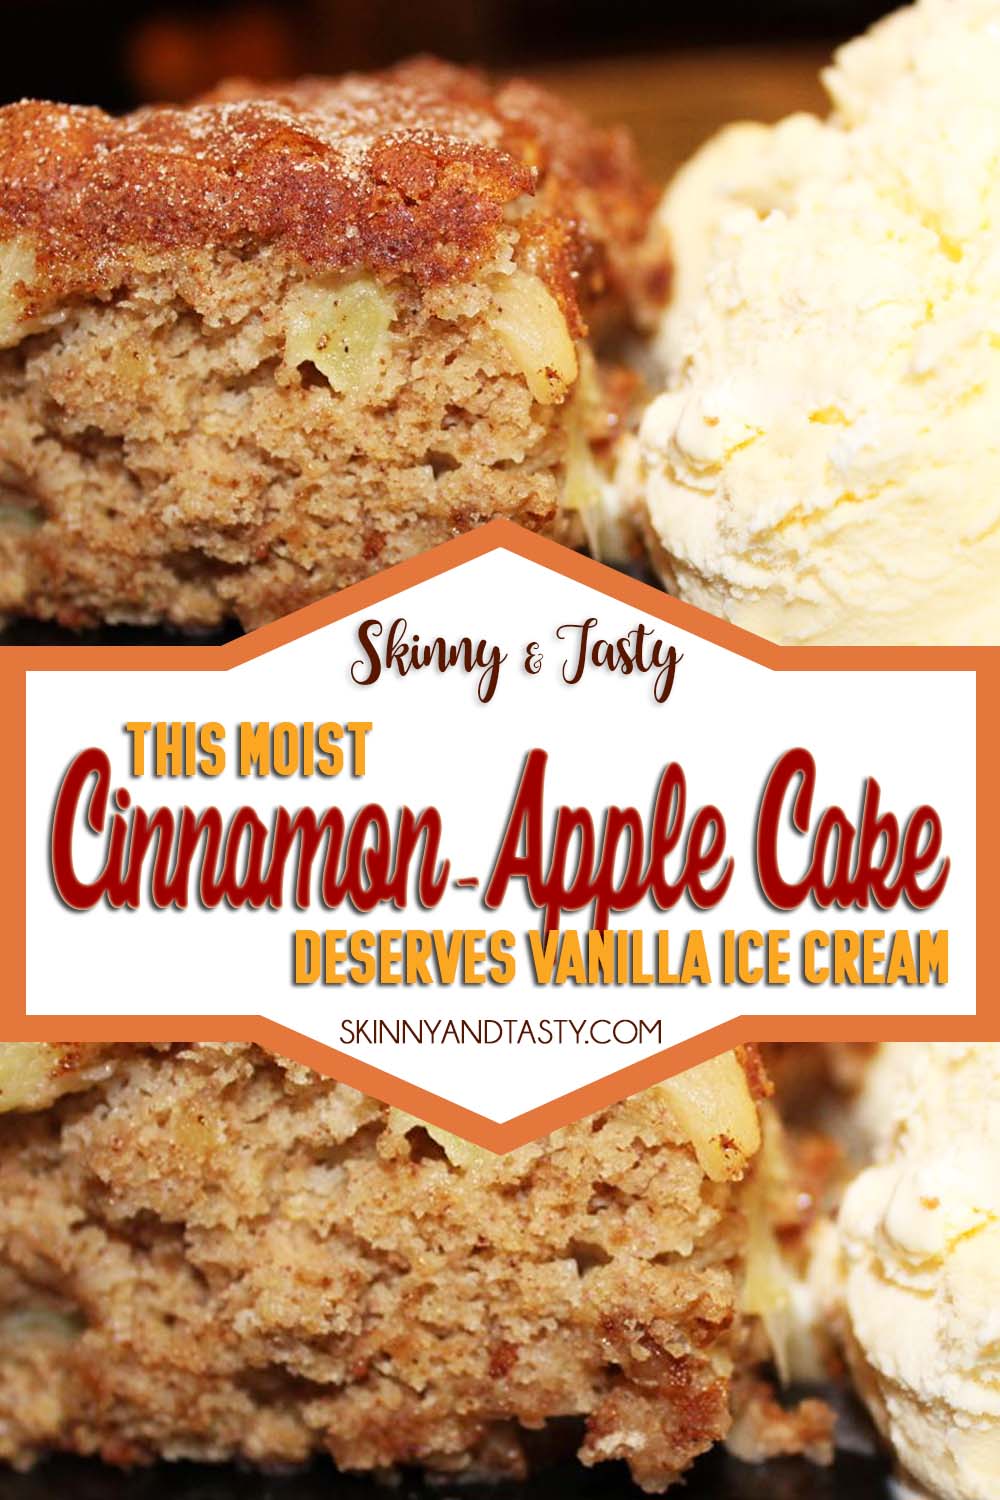 This Moist Cinnamon-Apple Cake Deserves Vanilla Ice Cream